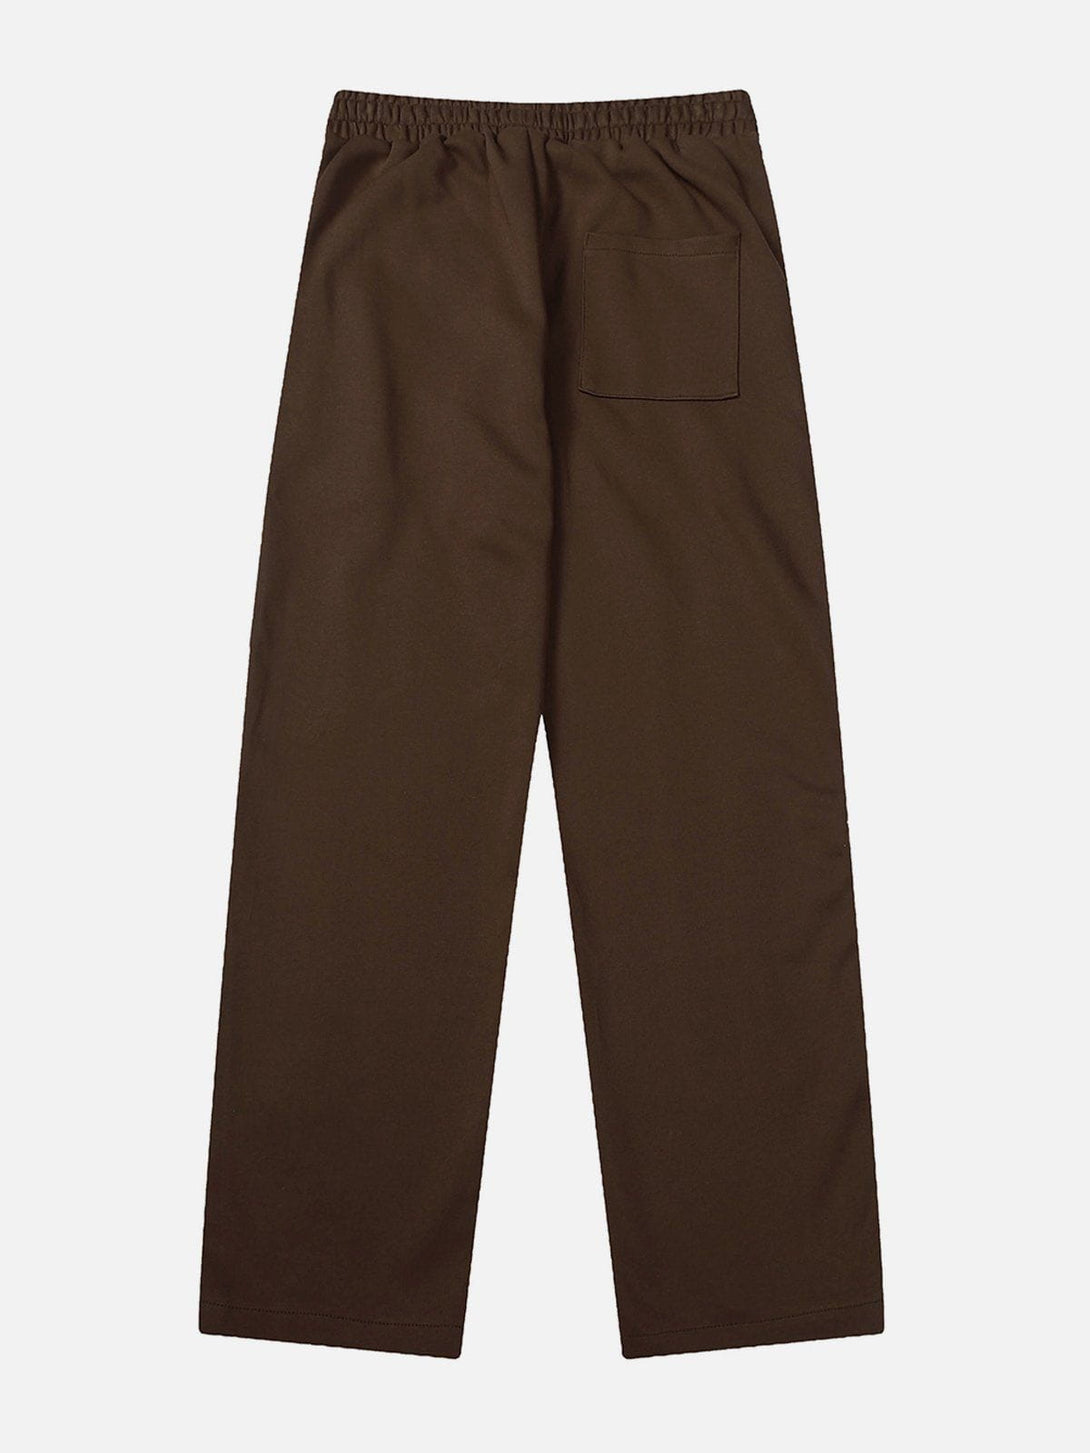 Levefly - Vertical Stripe Drawstring Sweatpants - Streetwear Fashion - levefly.com